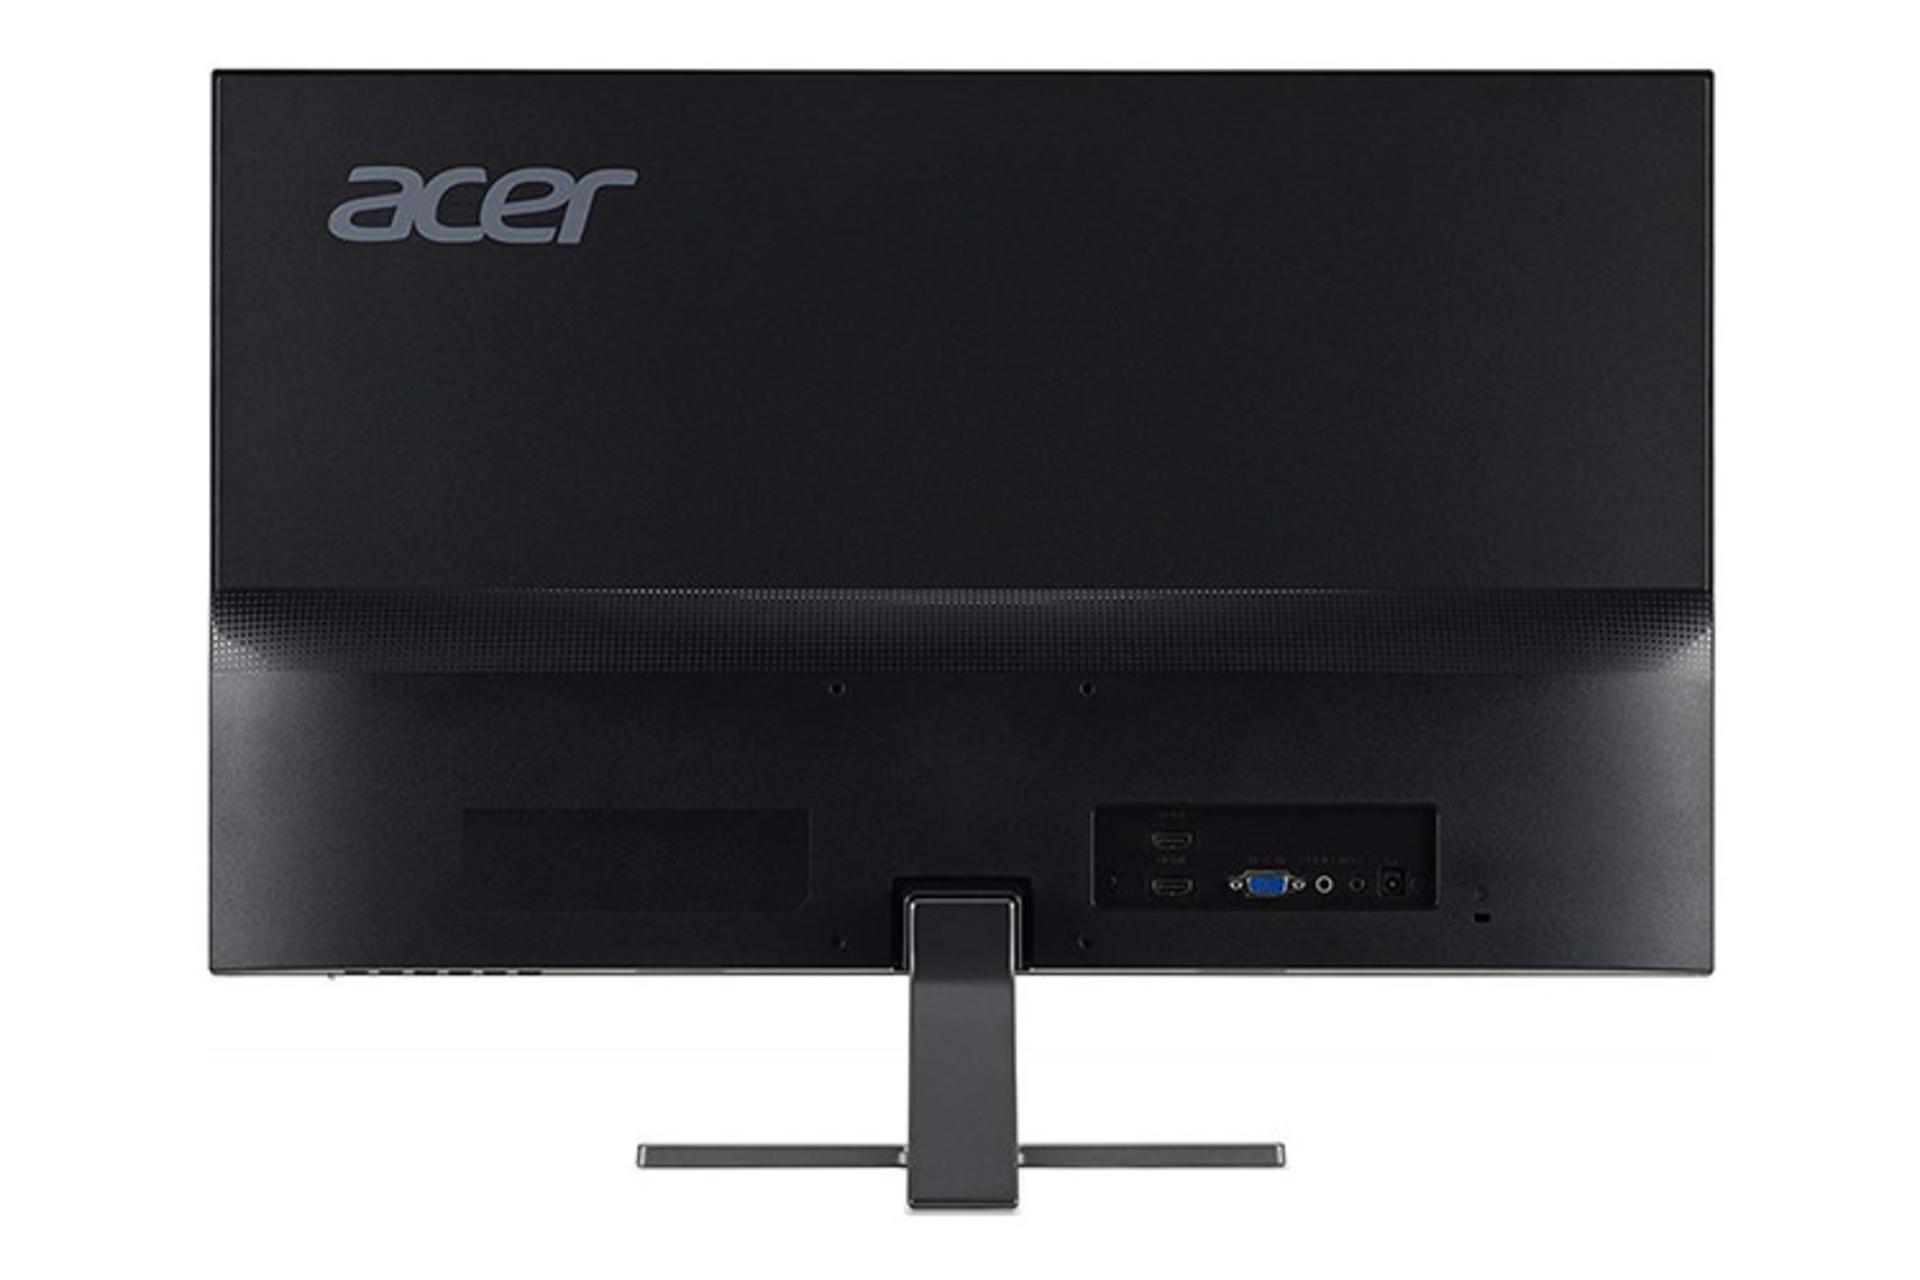 Acer RG240 FHD